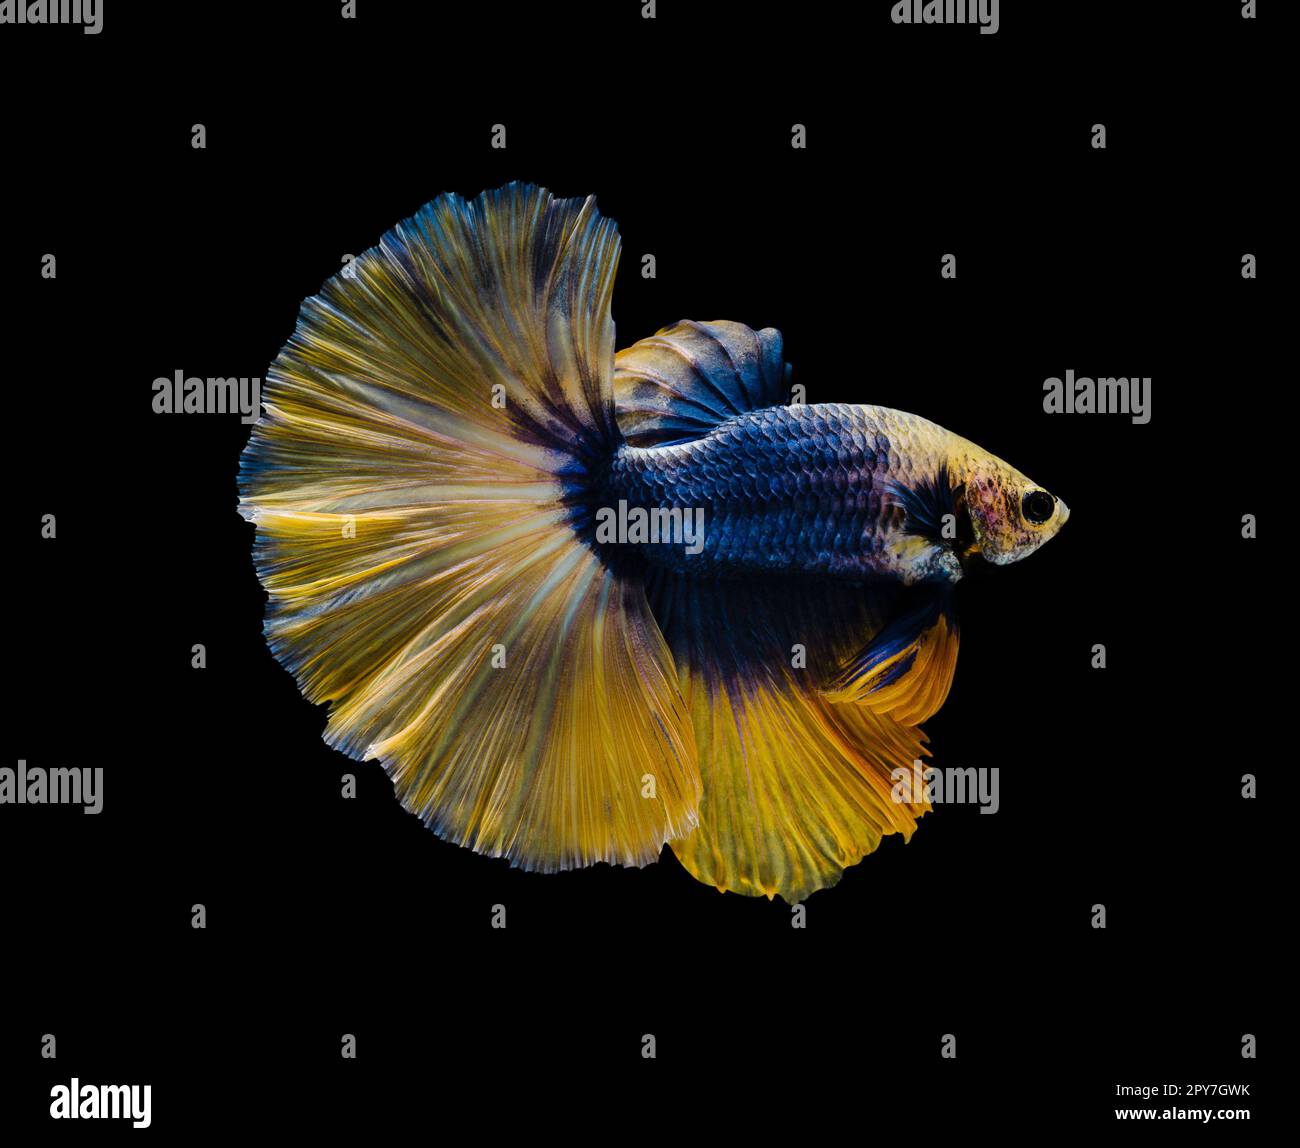 Yellow and blue half moon Betta splendens fish (Siamese fighting fish) on black background. Stock Photo